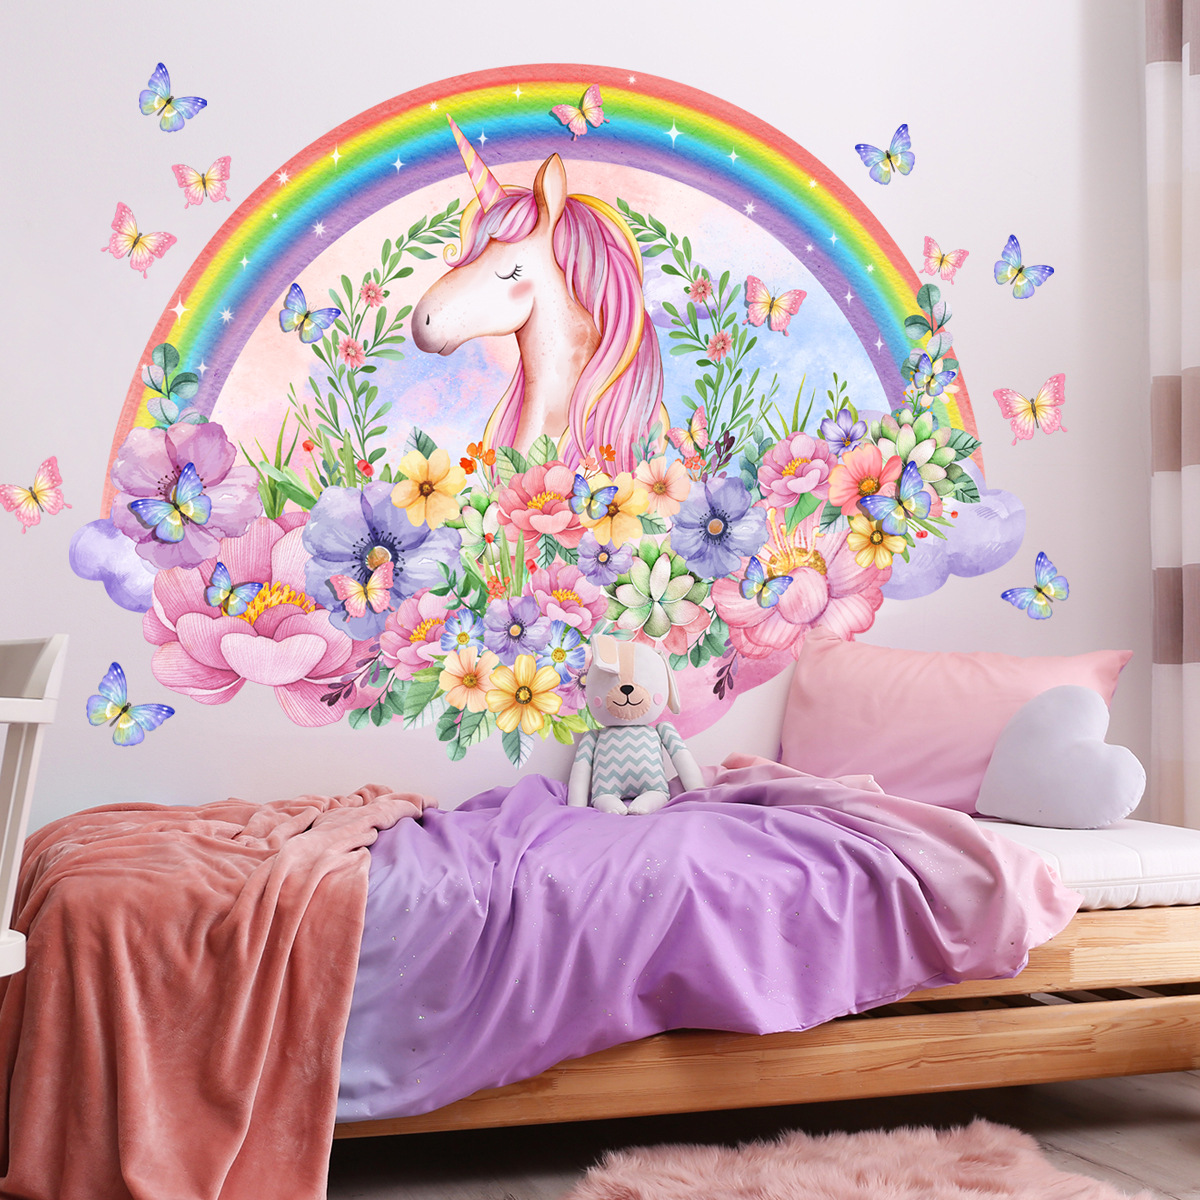 Cute Animal Cartoon Rainbow Plastic Wall Sticker Wall Art display picture 3